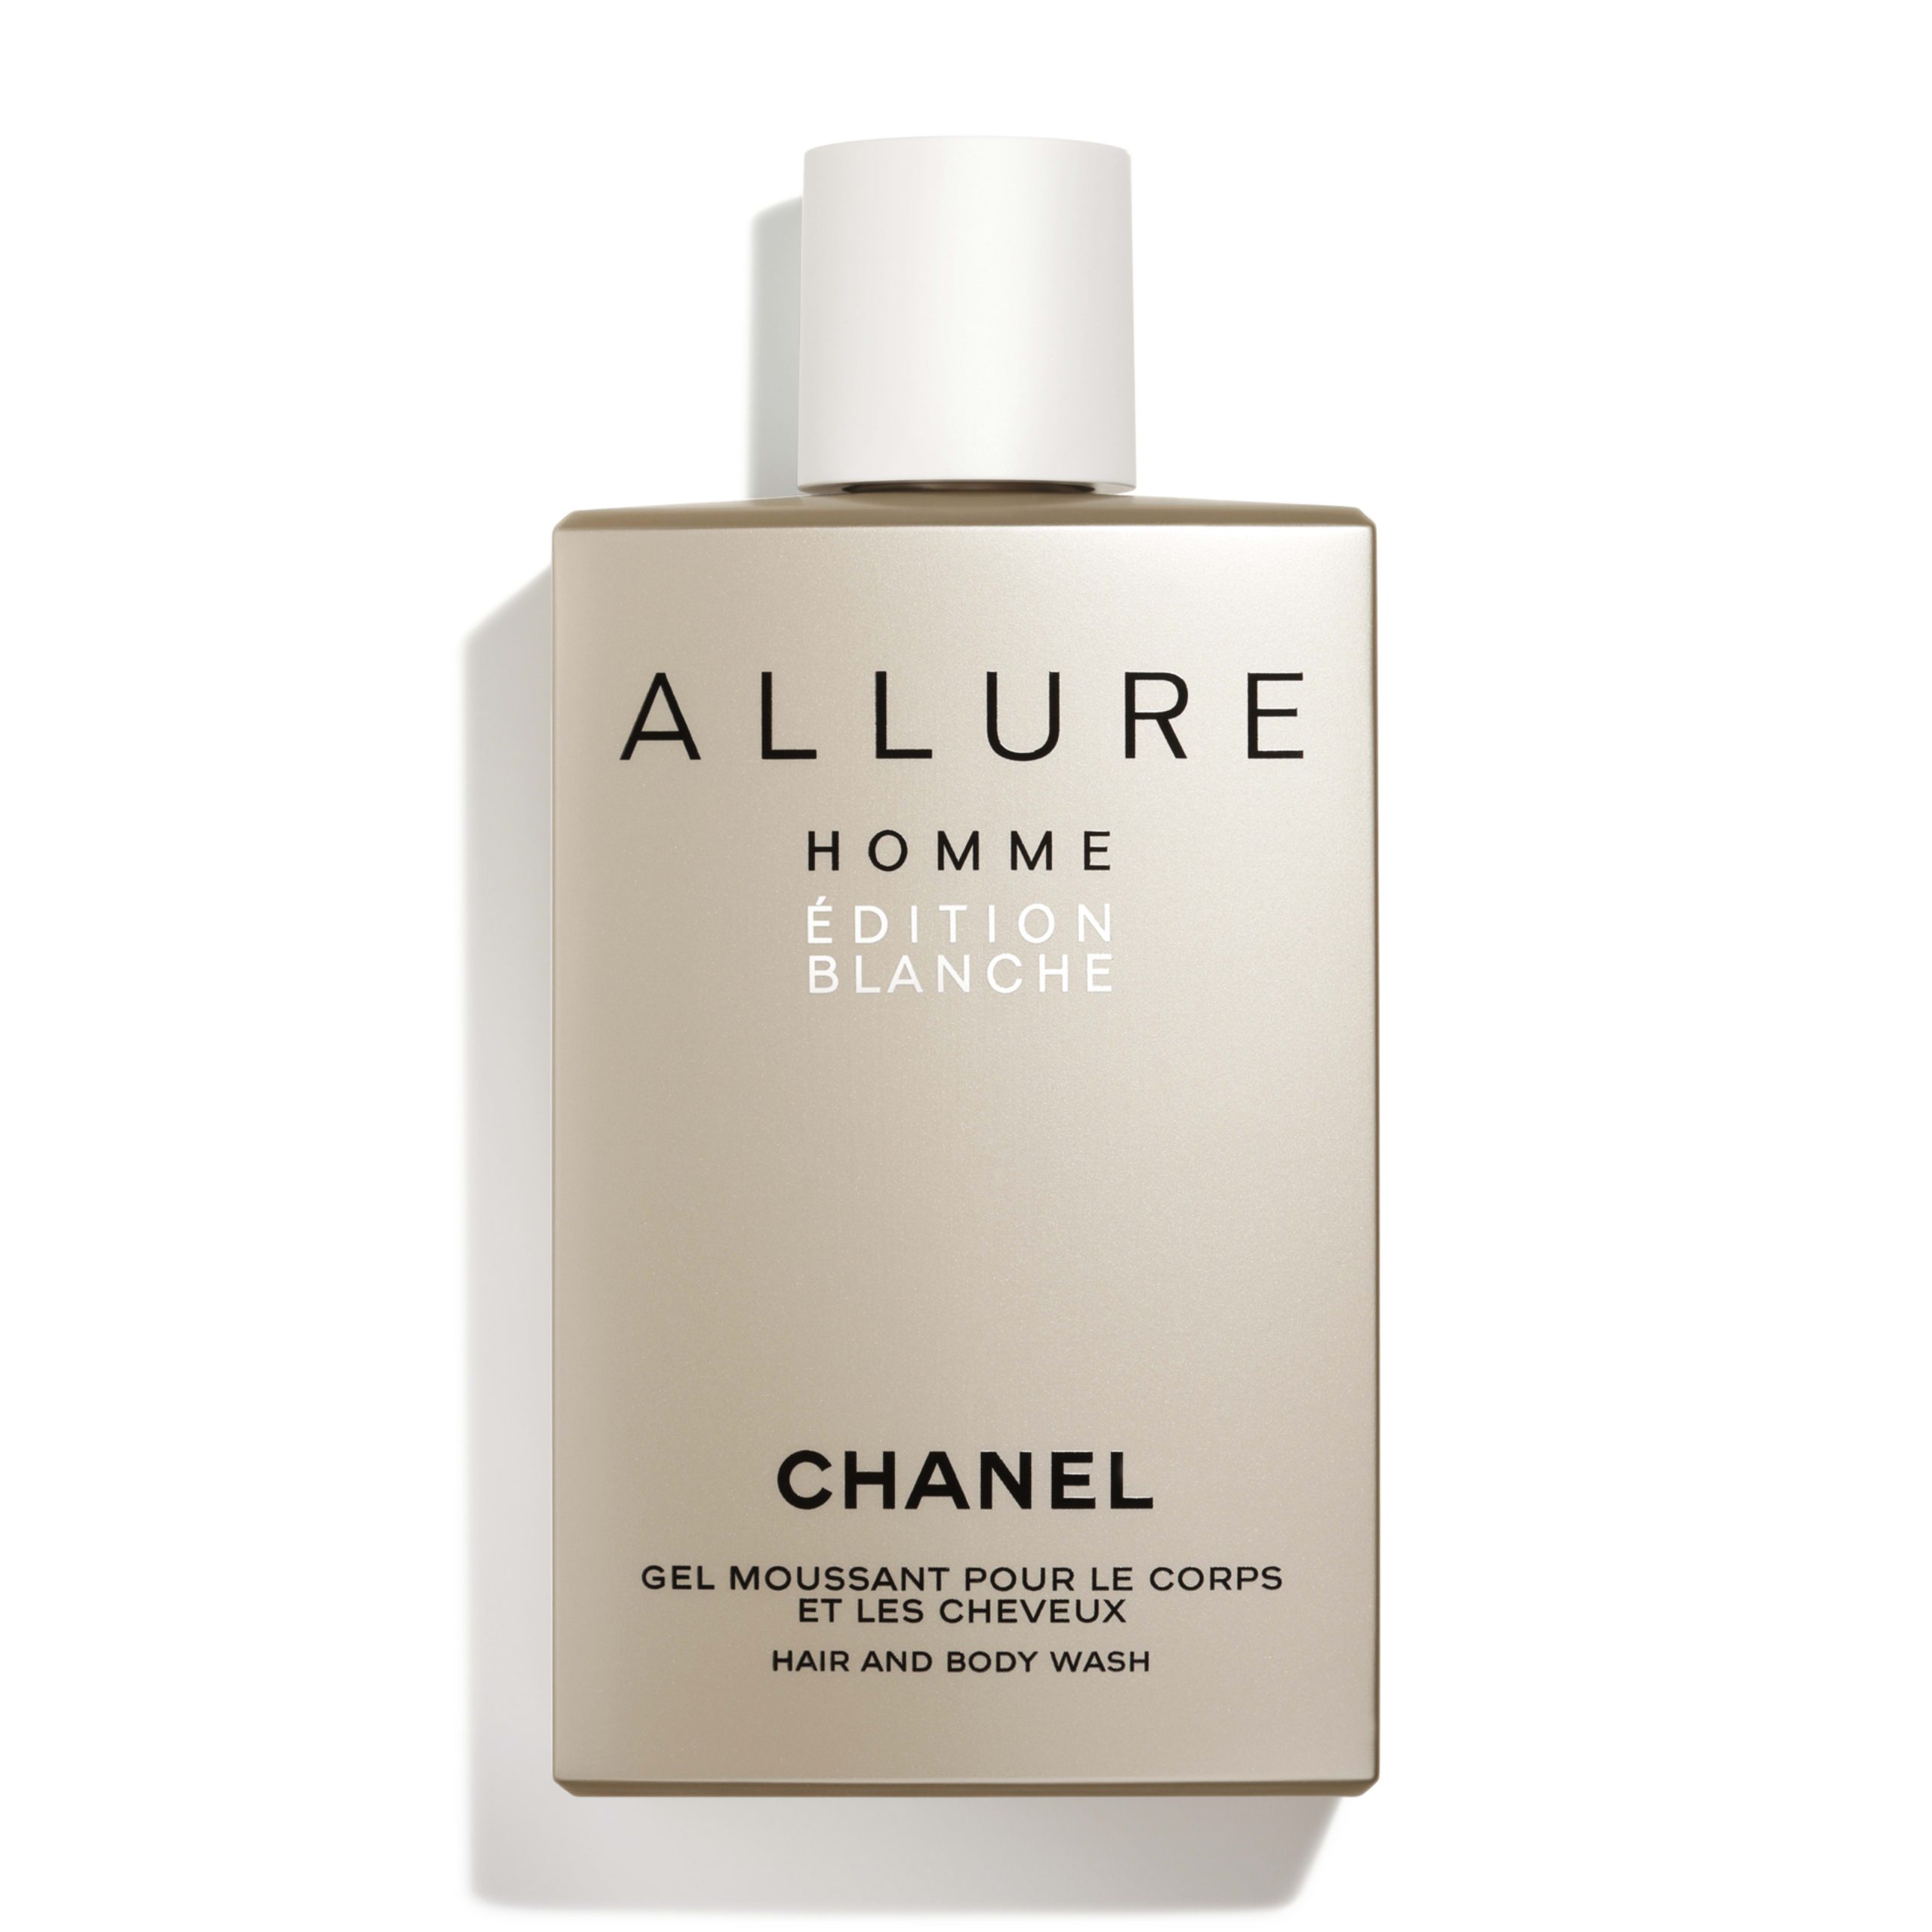 ALLURE HOMME EDITION BLANCHE – Opulent Fragrances